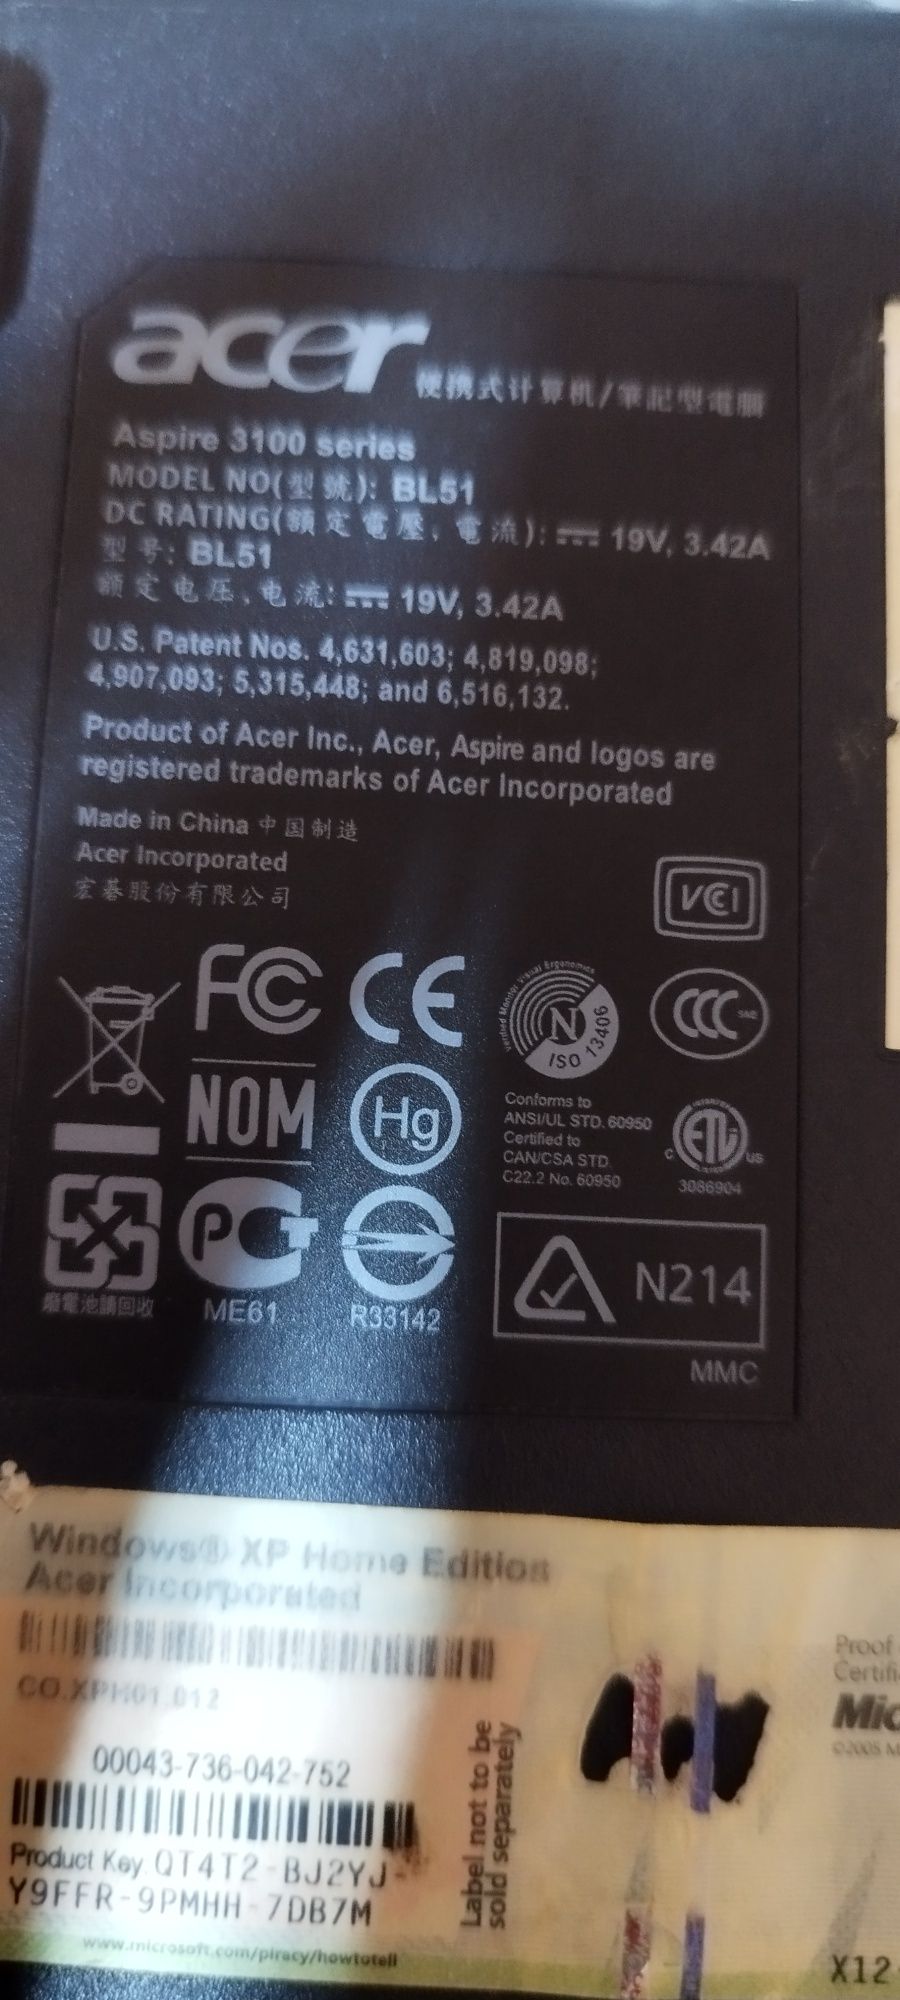 Acer aspire 3100 series